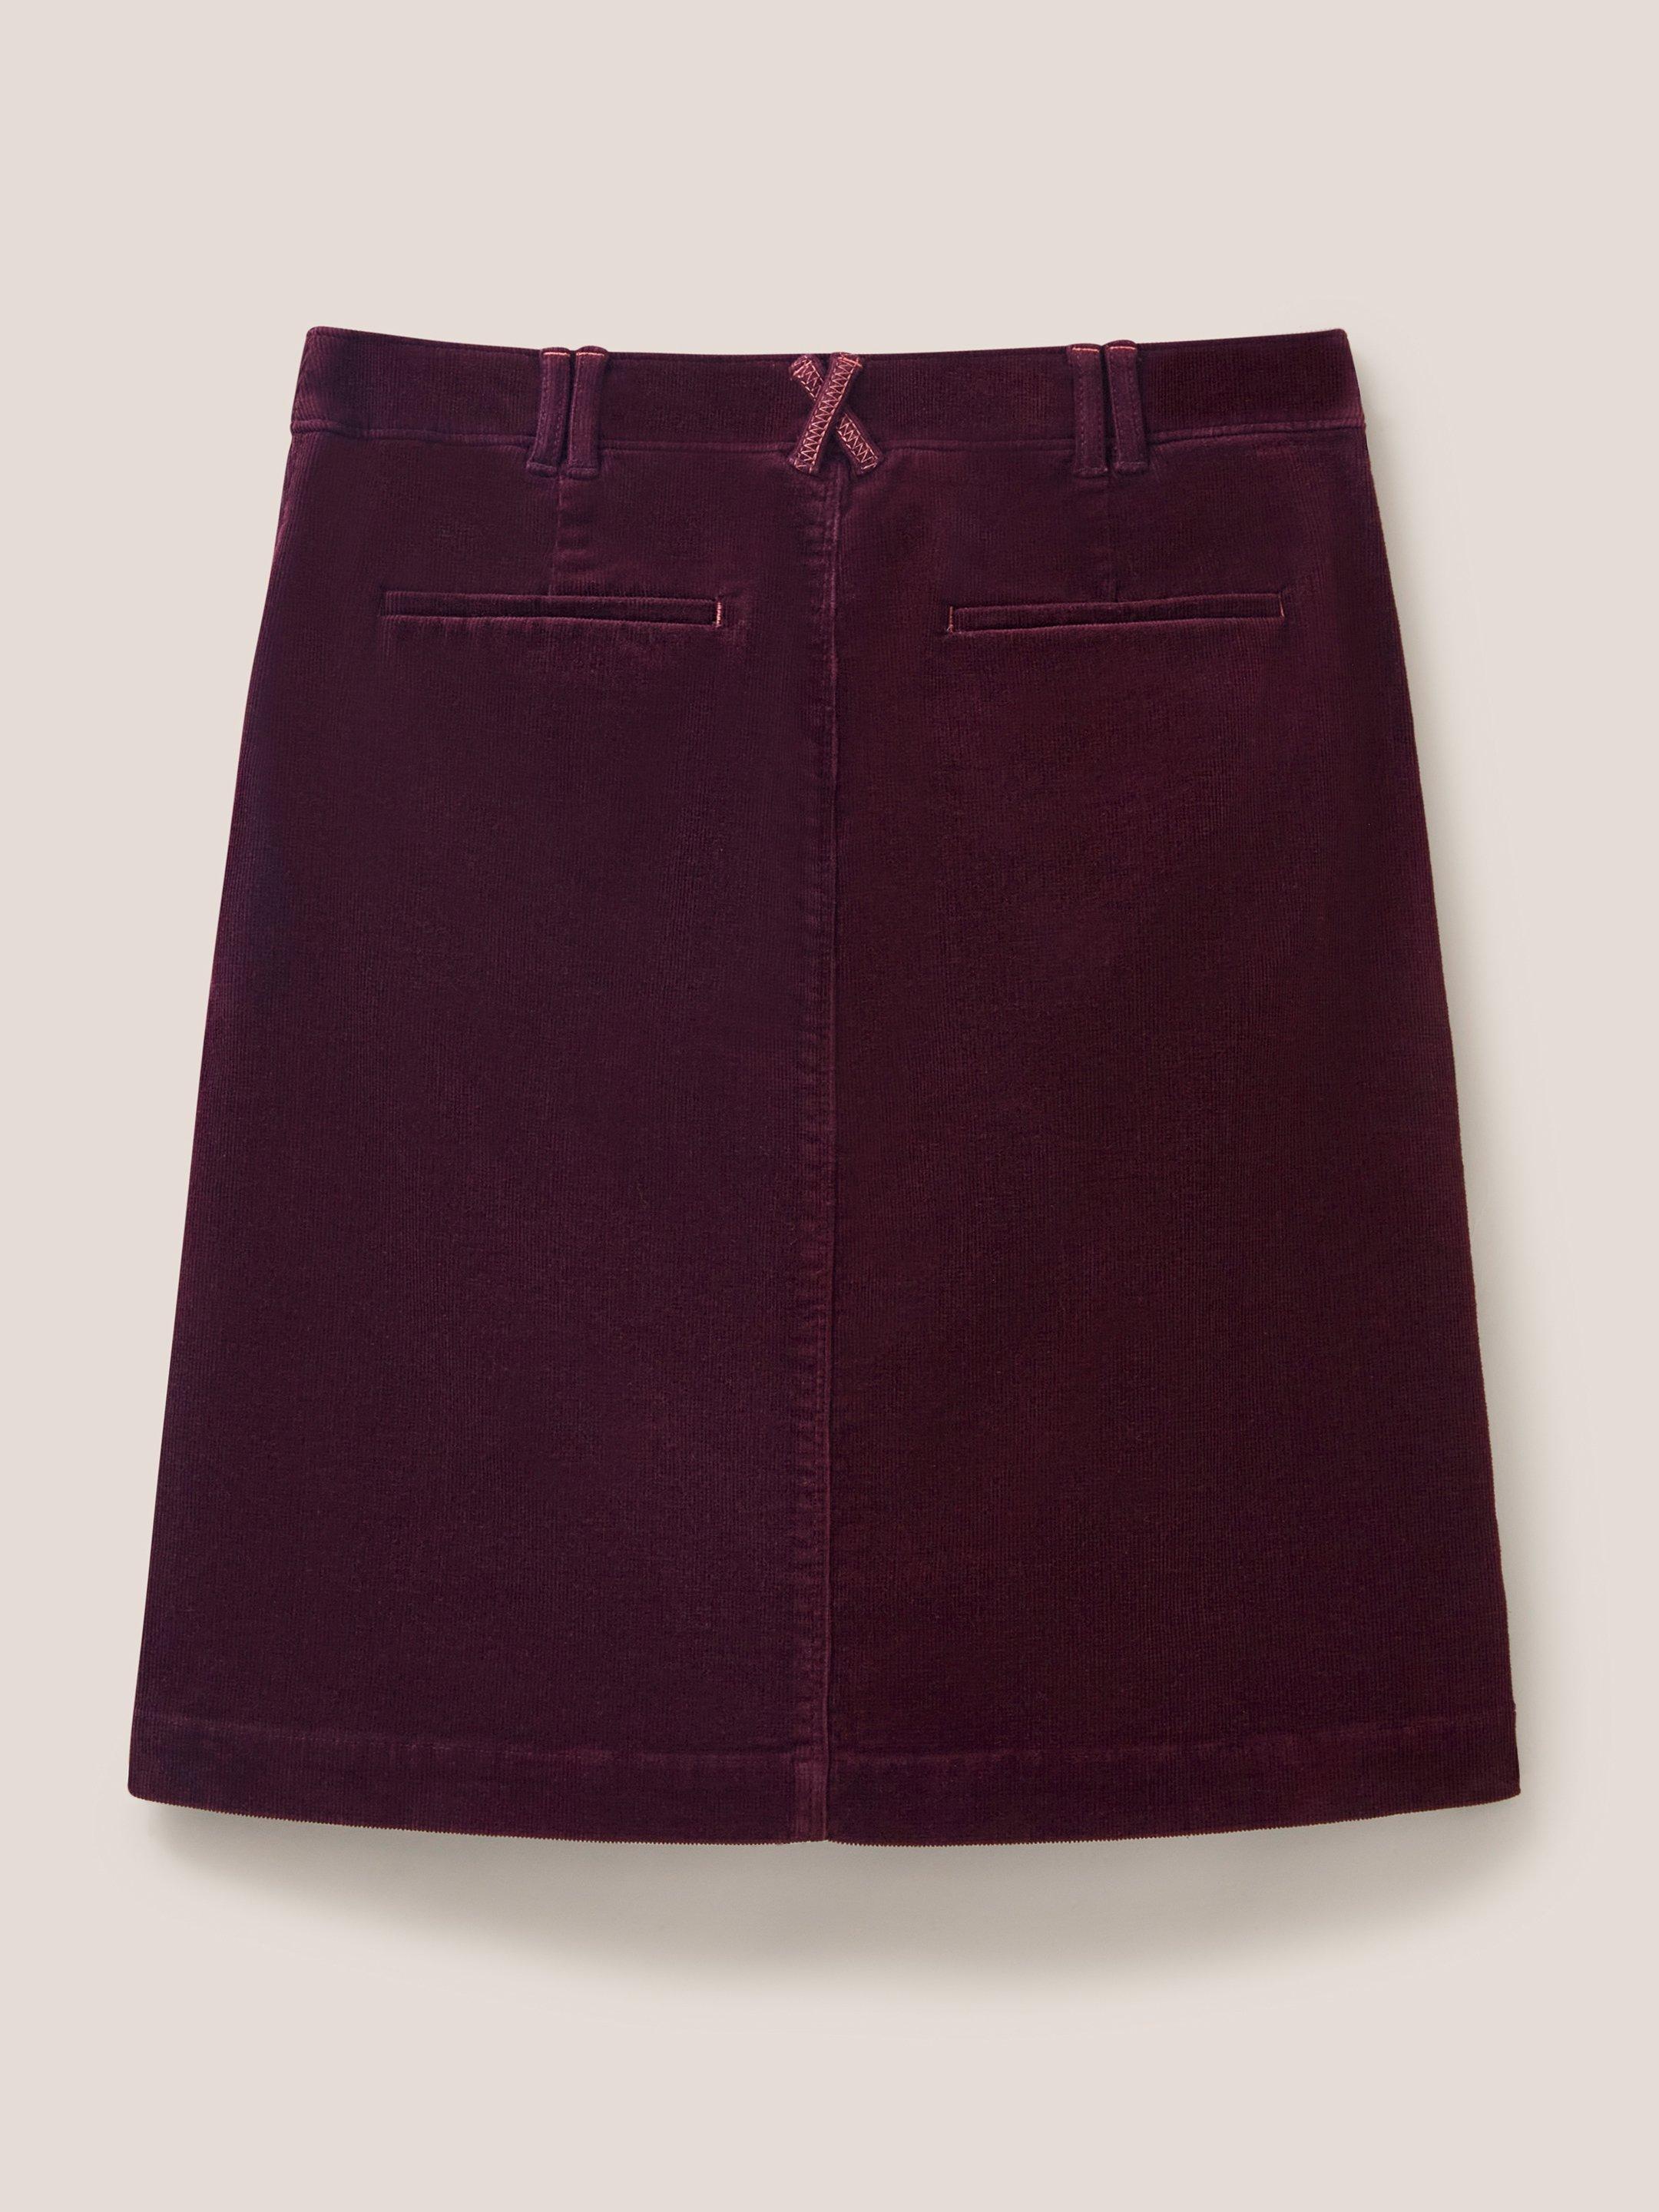 Melody Organic Cord Skirt in DK PLUM - FLAT BACK